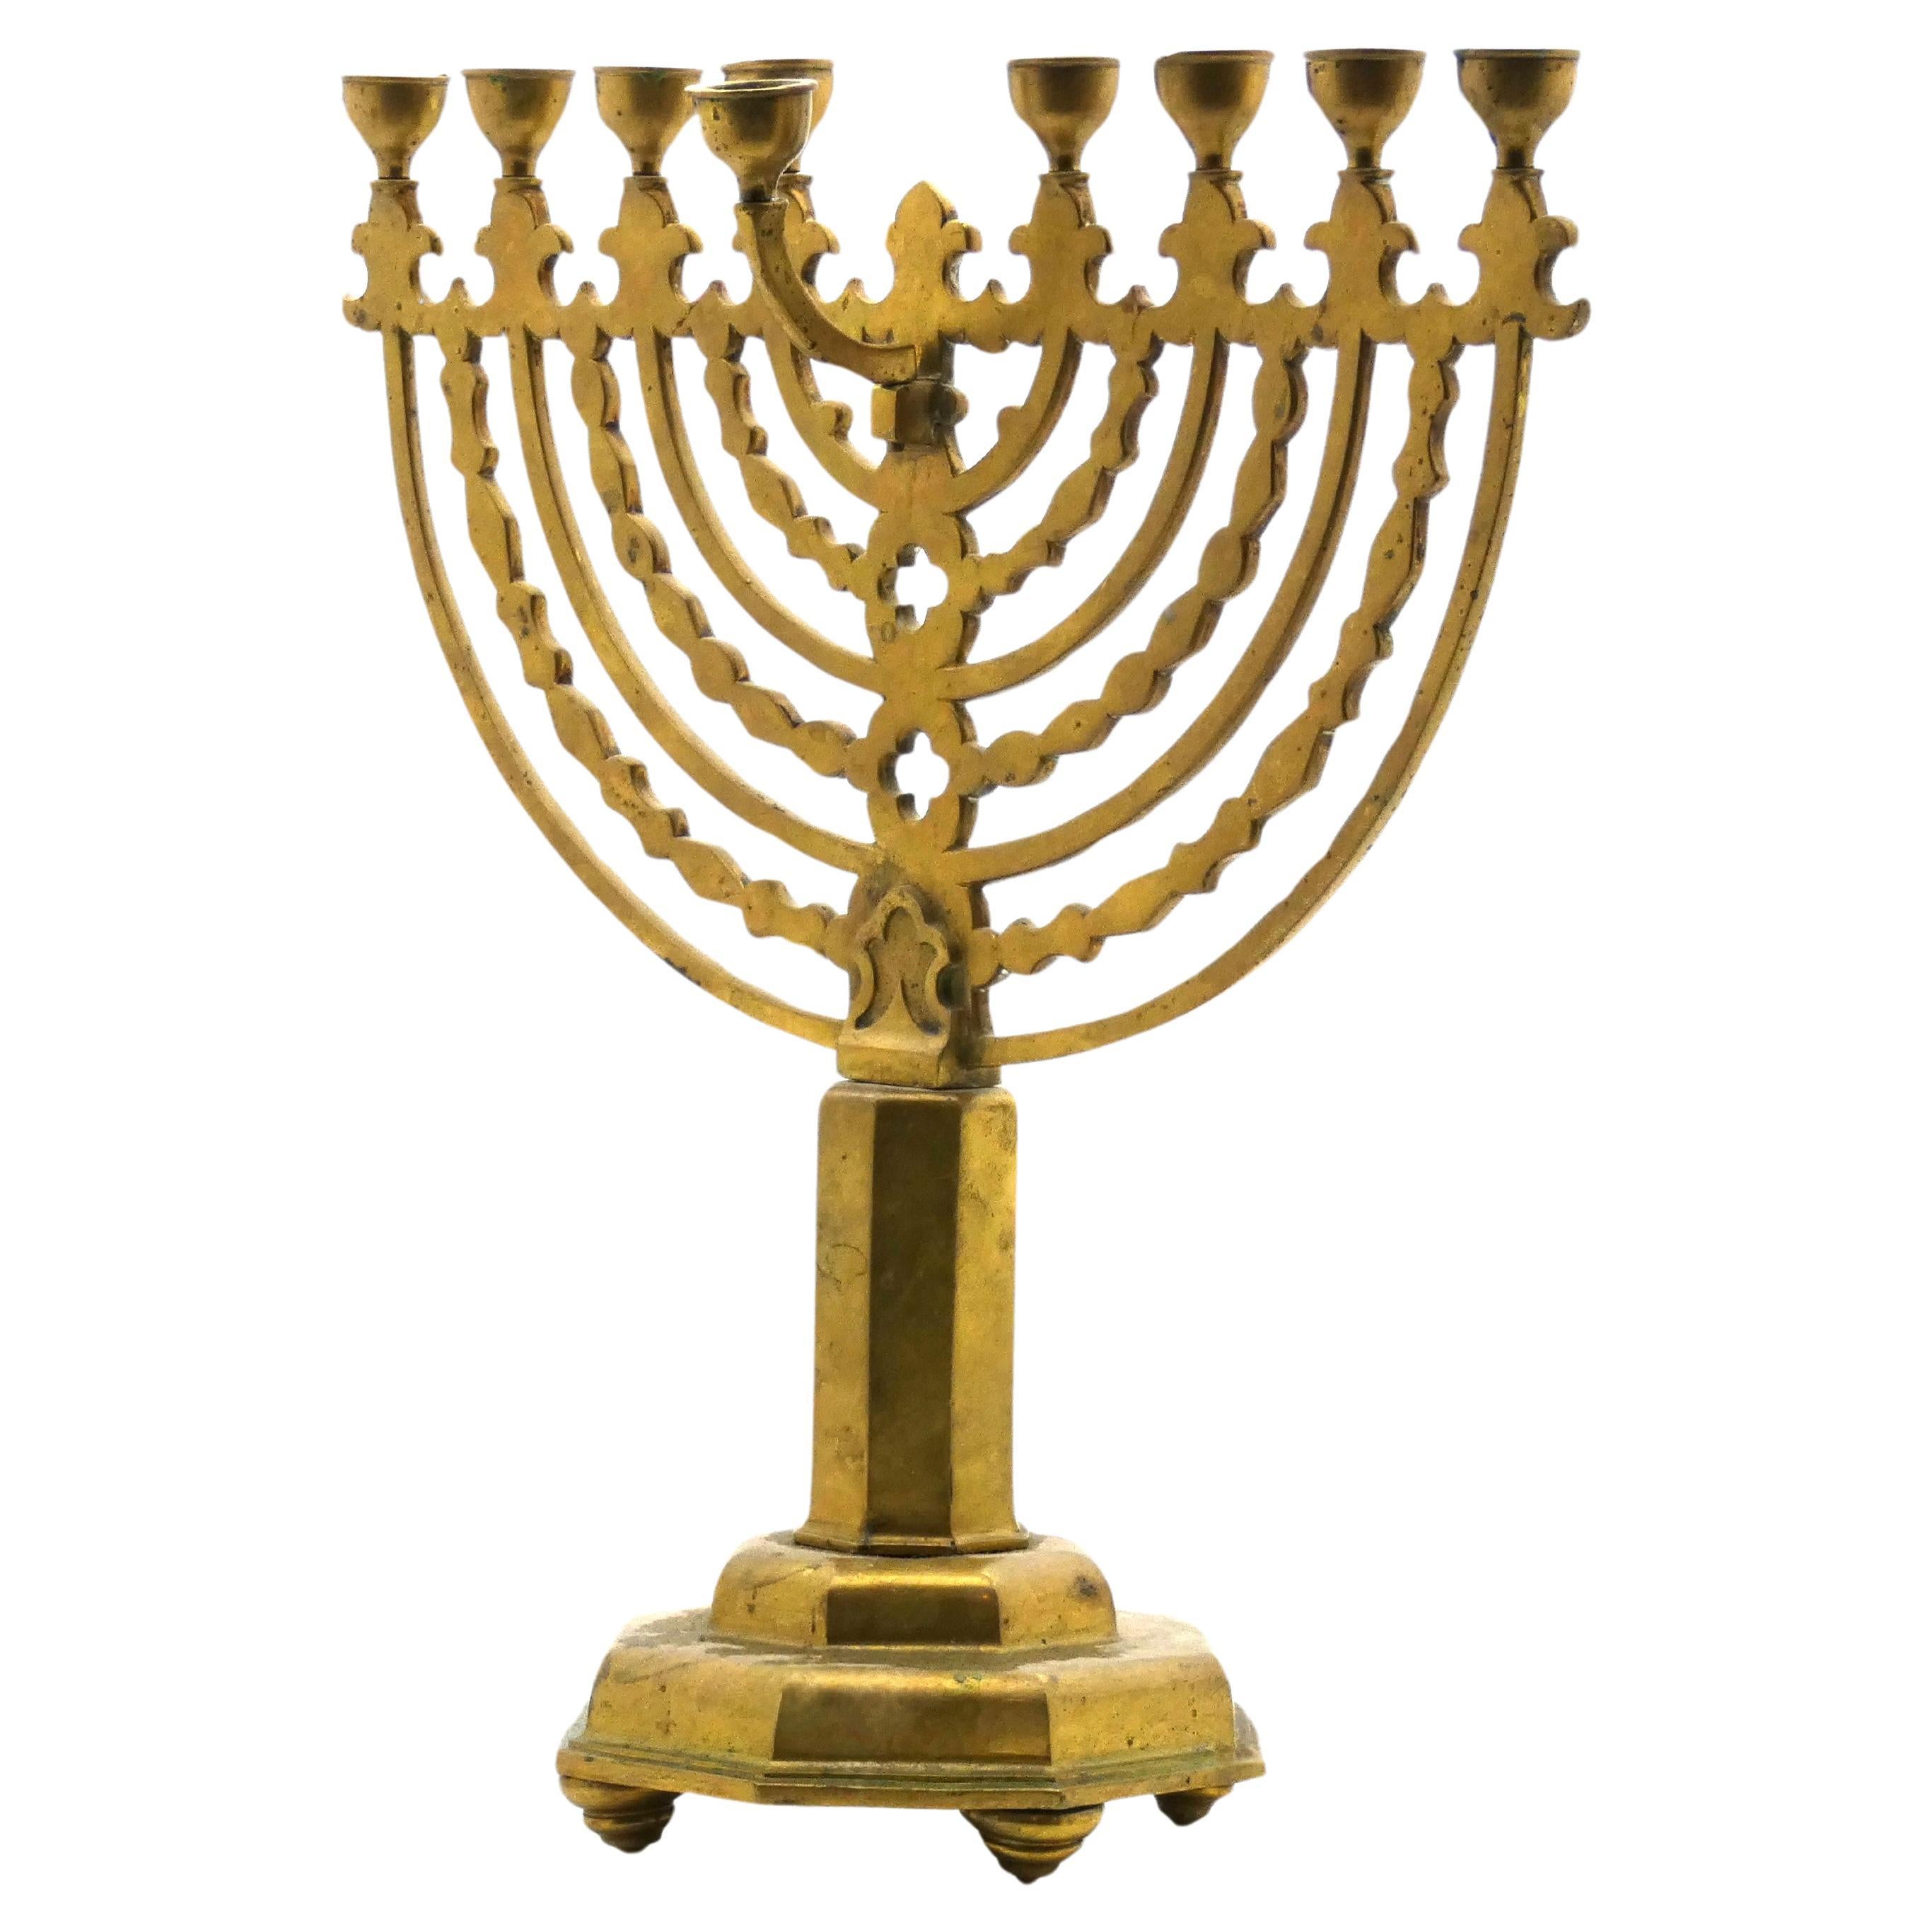 A Large German Brass Hanukkah Menorah early 20th Century For Sale